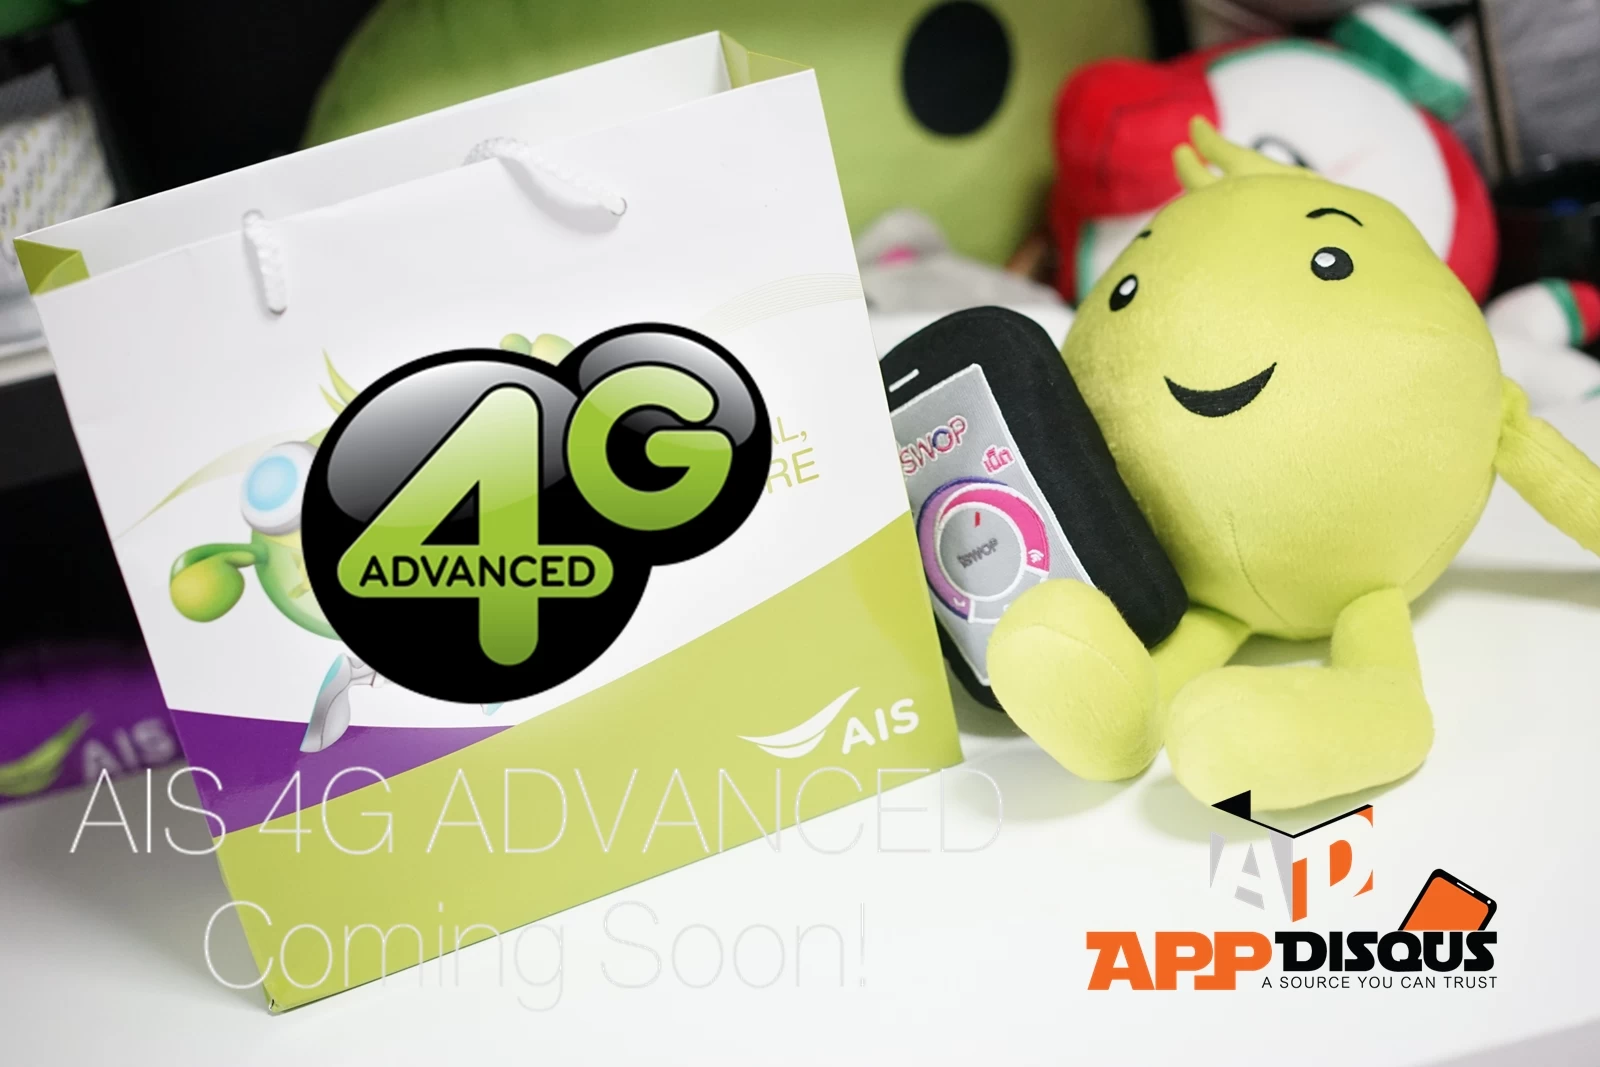 AIS 4g advance appdisqus | 3G | ในที่สุด AIS ไปจับมือ TOT จนได้! เตรียมนำคลื่น 2100 ของทีโอที 15MHz เข้ามาเสริมทัพ พร้อมเปิดใจไม่เอาคลื่น 900MHz ในราคาขนาดนั้น มันถูกต้องแล้ว